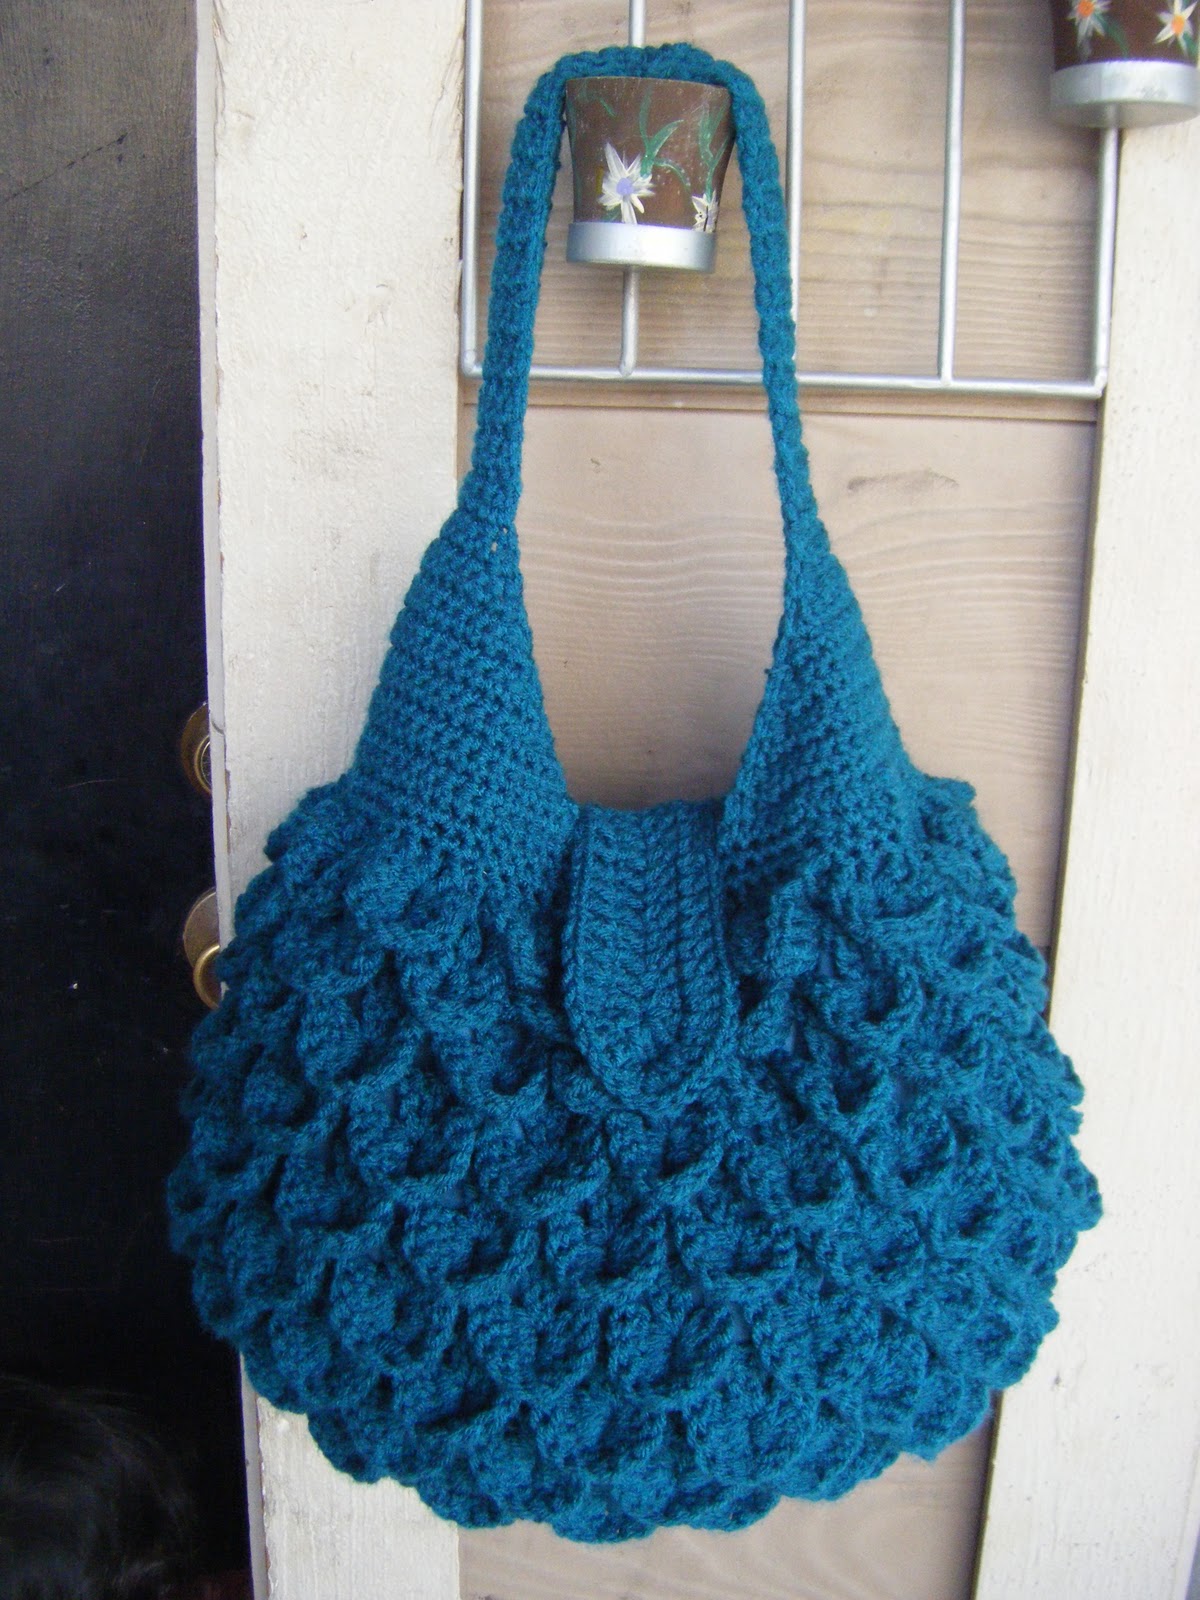 6 Free Crochet Bag Patterns: Crochet Bags with Crochet Me - Crochet Me